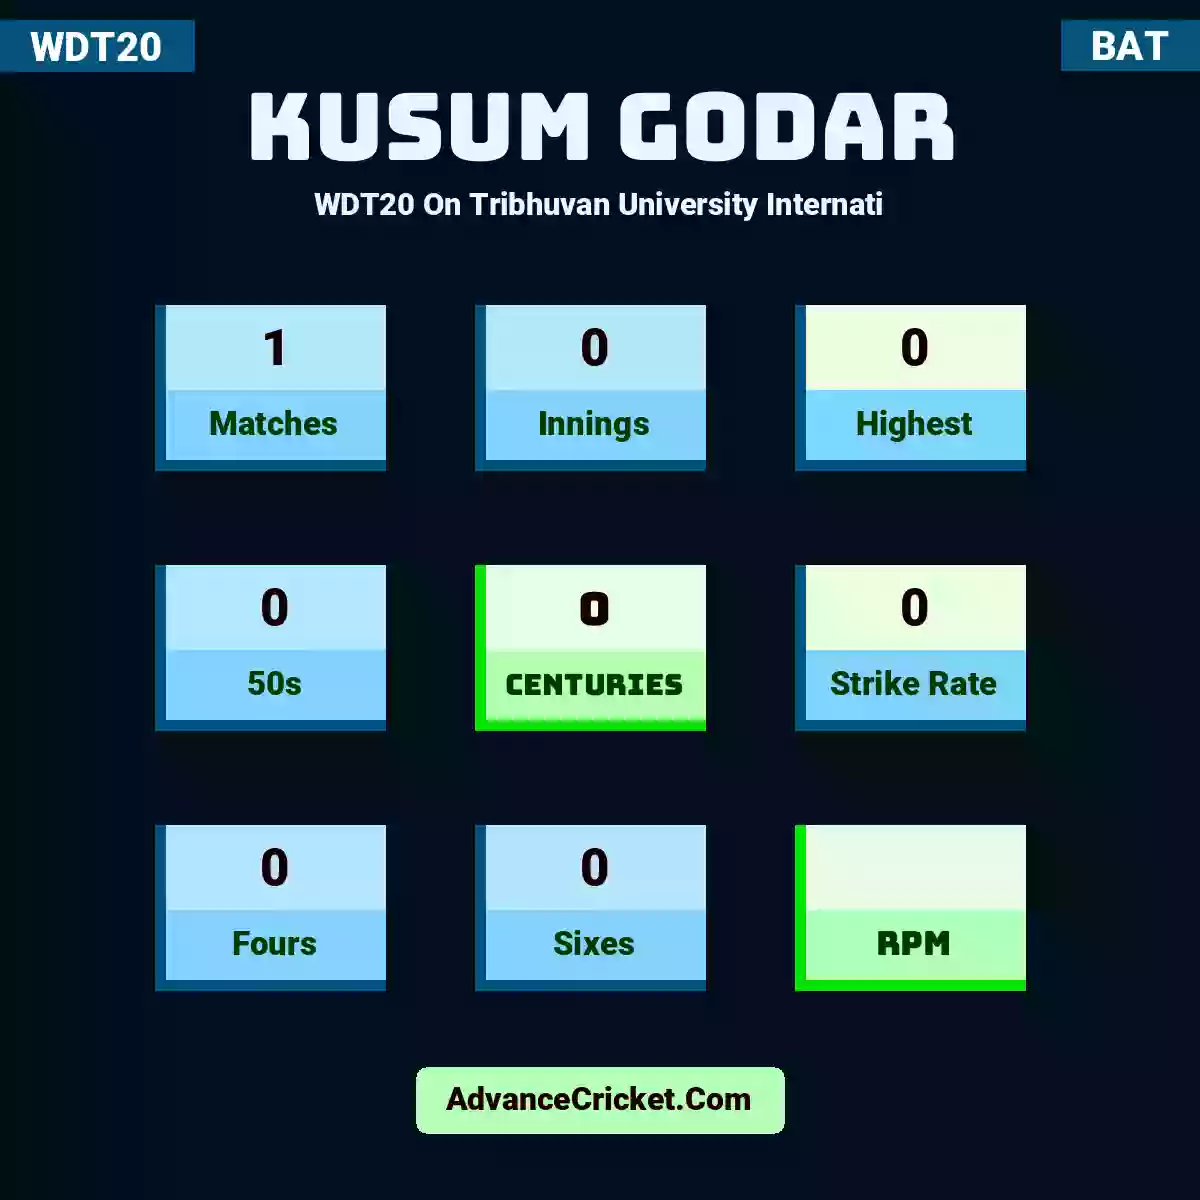 Kusum Godar WDT20  On Tribhuvan University Internati, Kusum Godar played 1 matches, scored 0 runs as highest, 0 half-centuries, and 0 centuries, with a strike rate of 0. K.Godar hit 0 fours and 0 sixes.